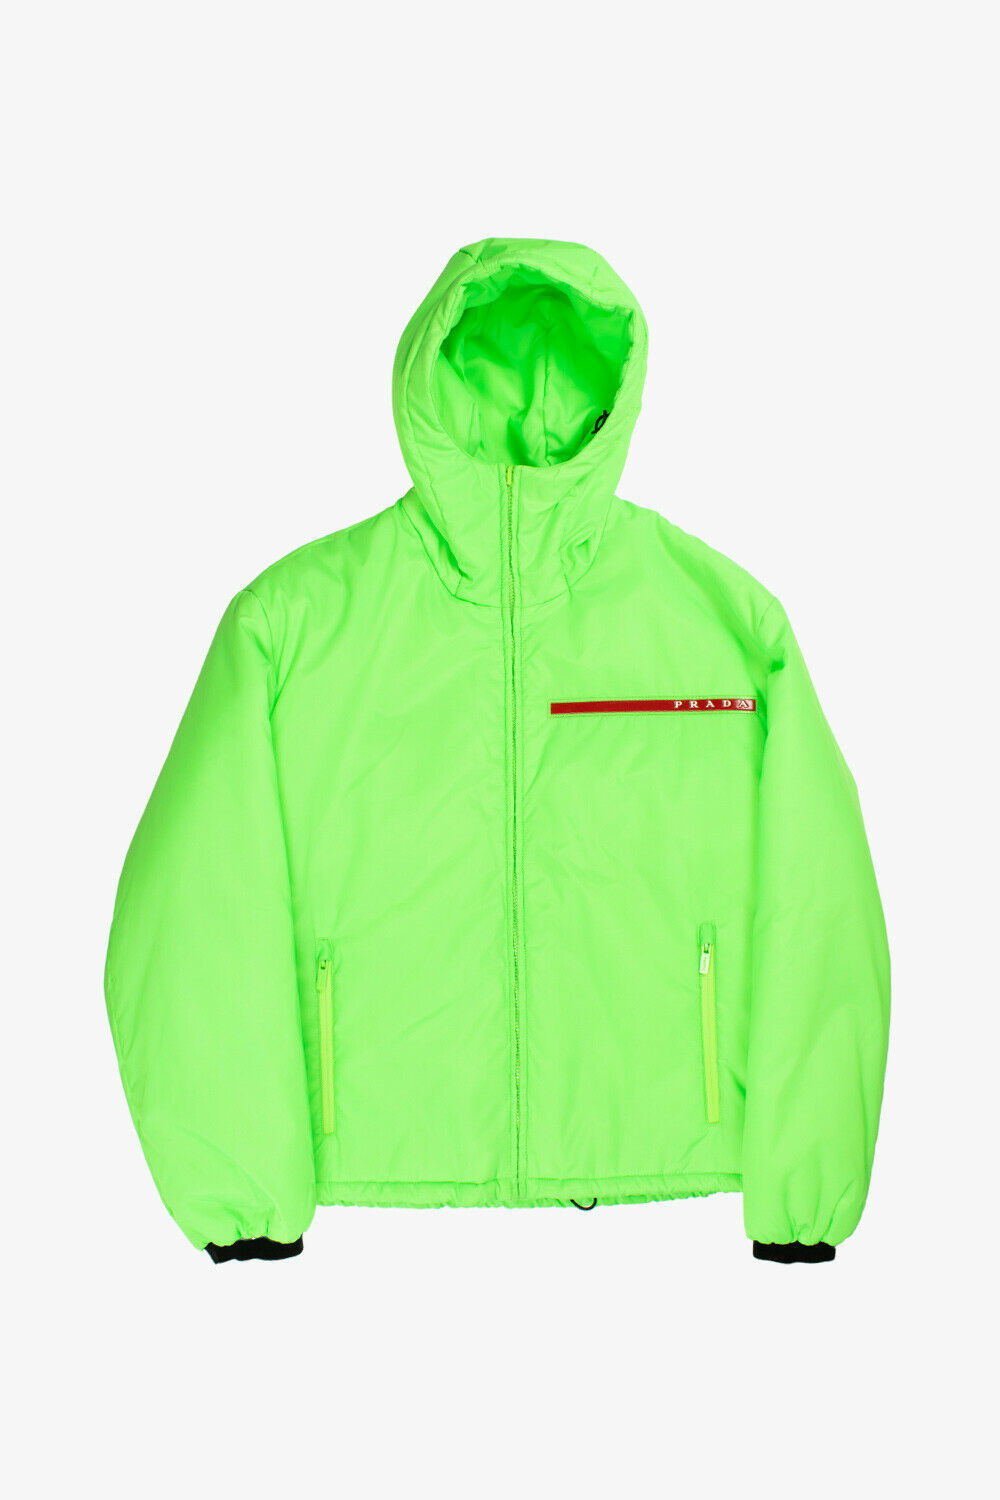 green prada jacket